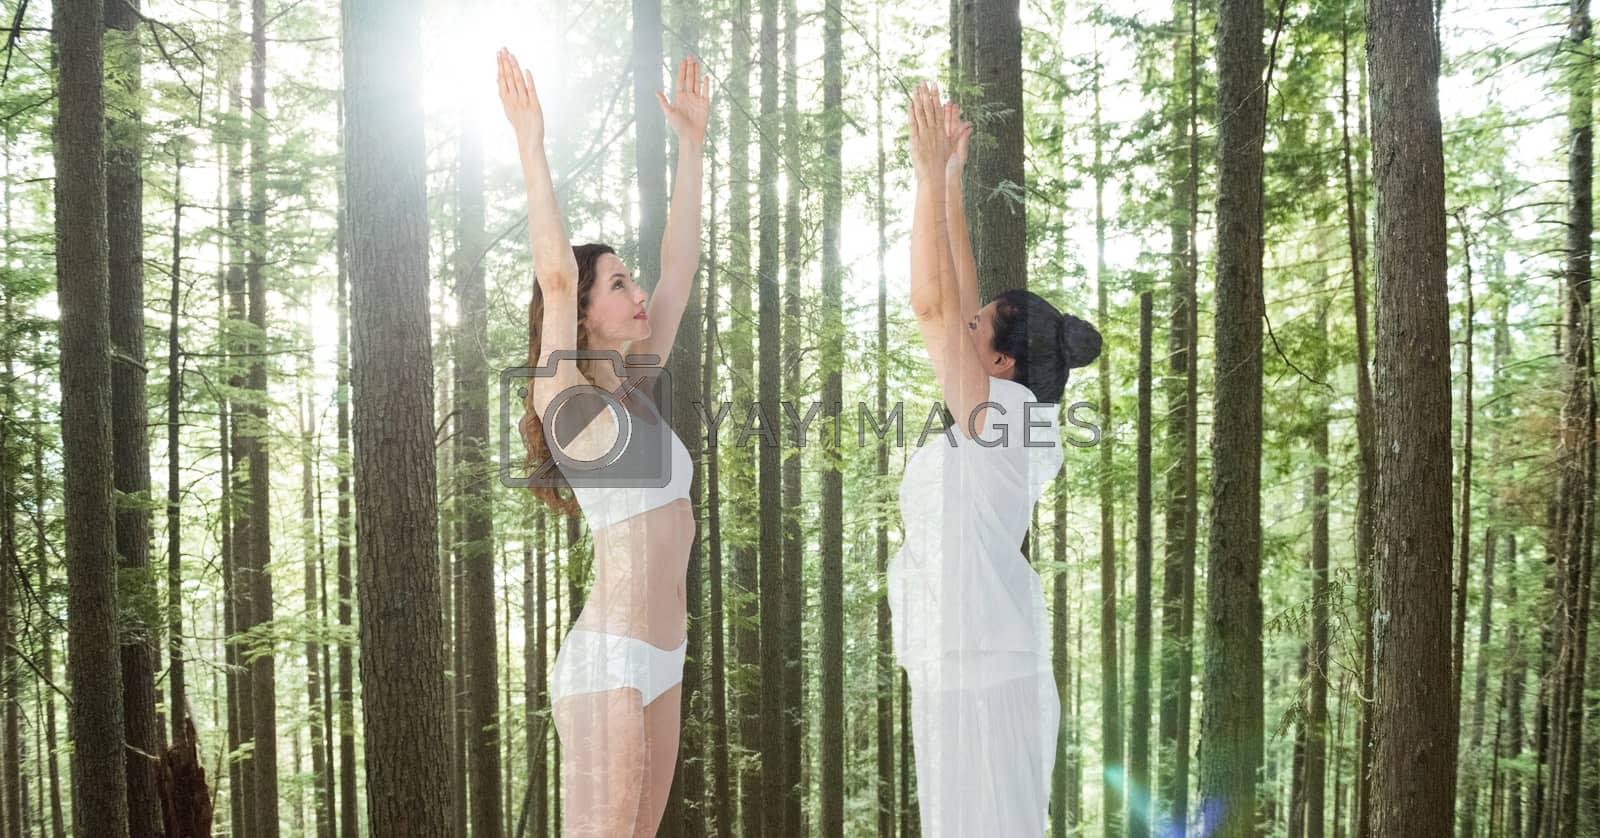 Royalty free image of Women performing yoga against trees by Wavebreakmedia